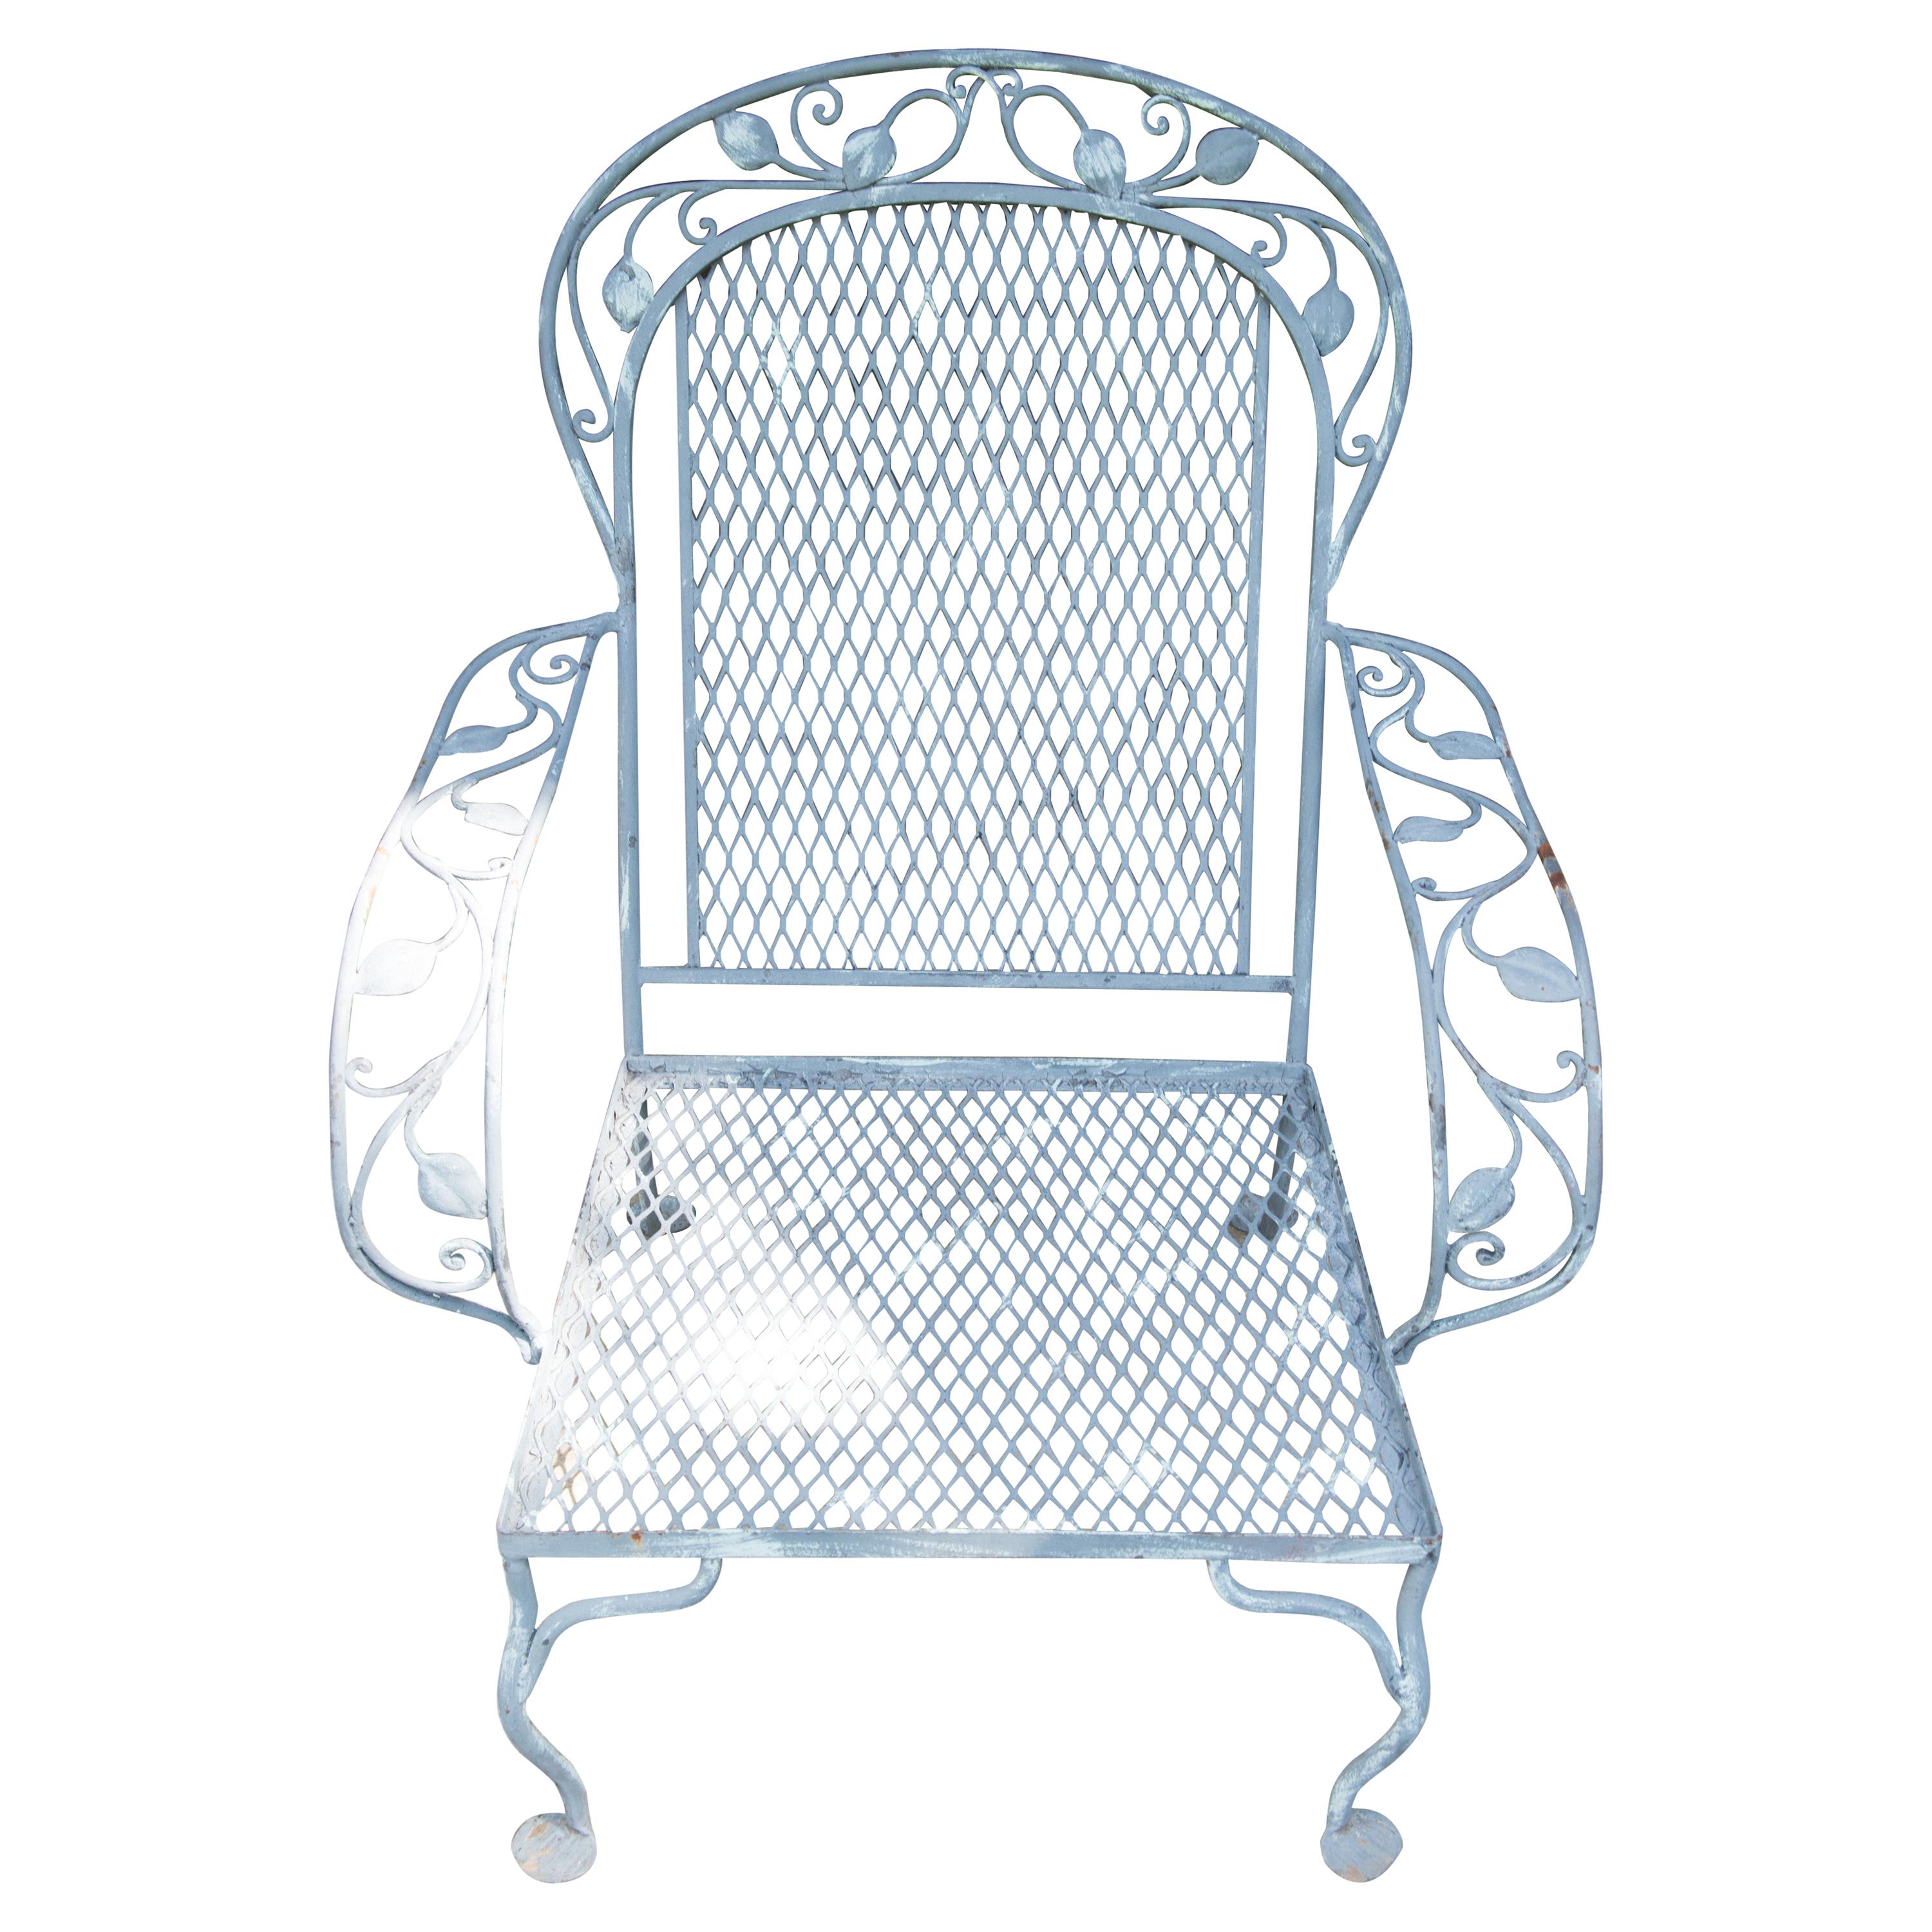 Classic High Quality Salterini Wrought Iron Garden Chair